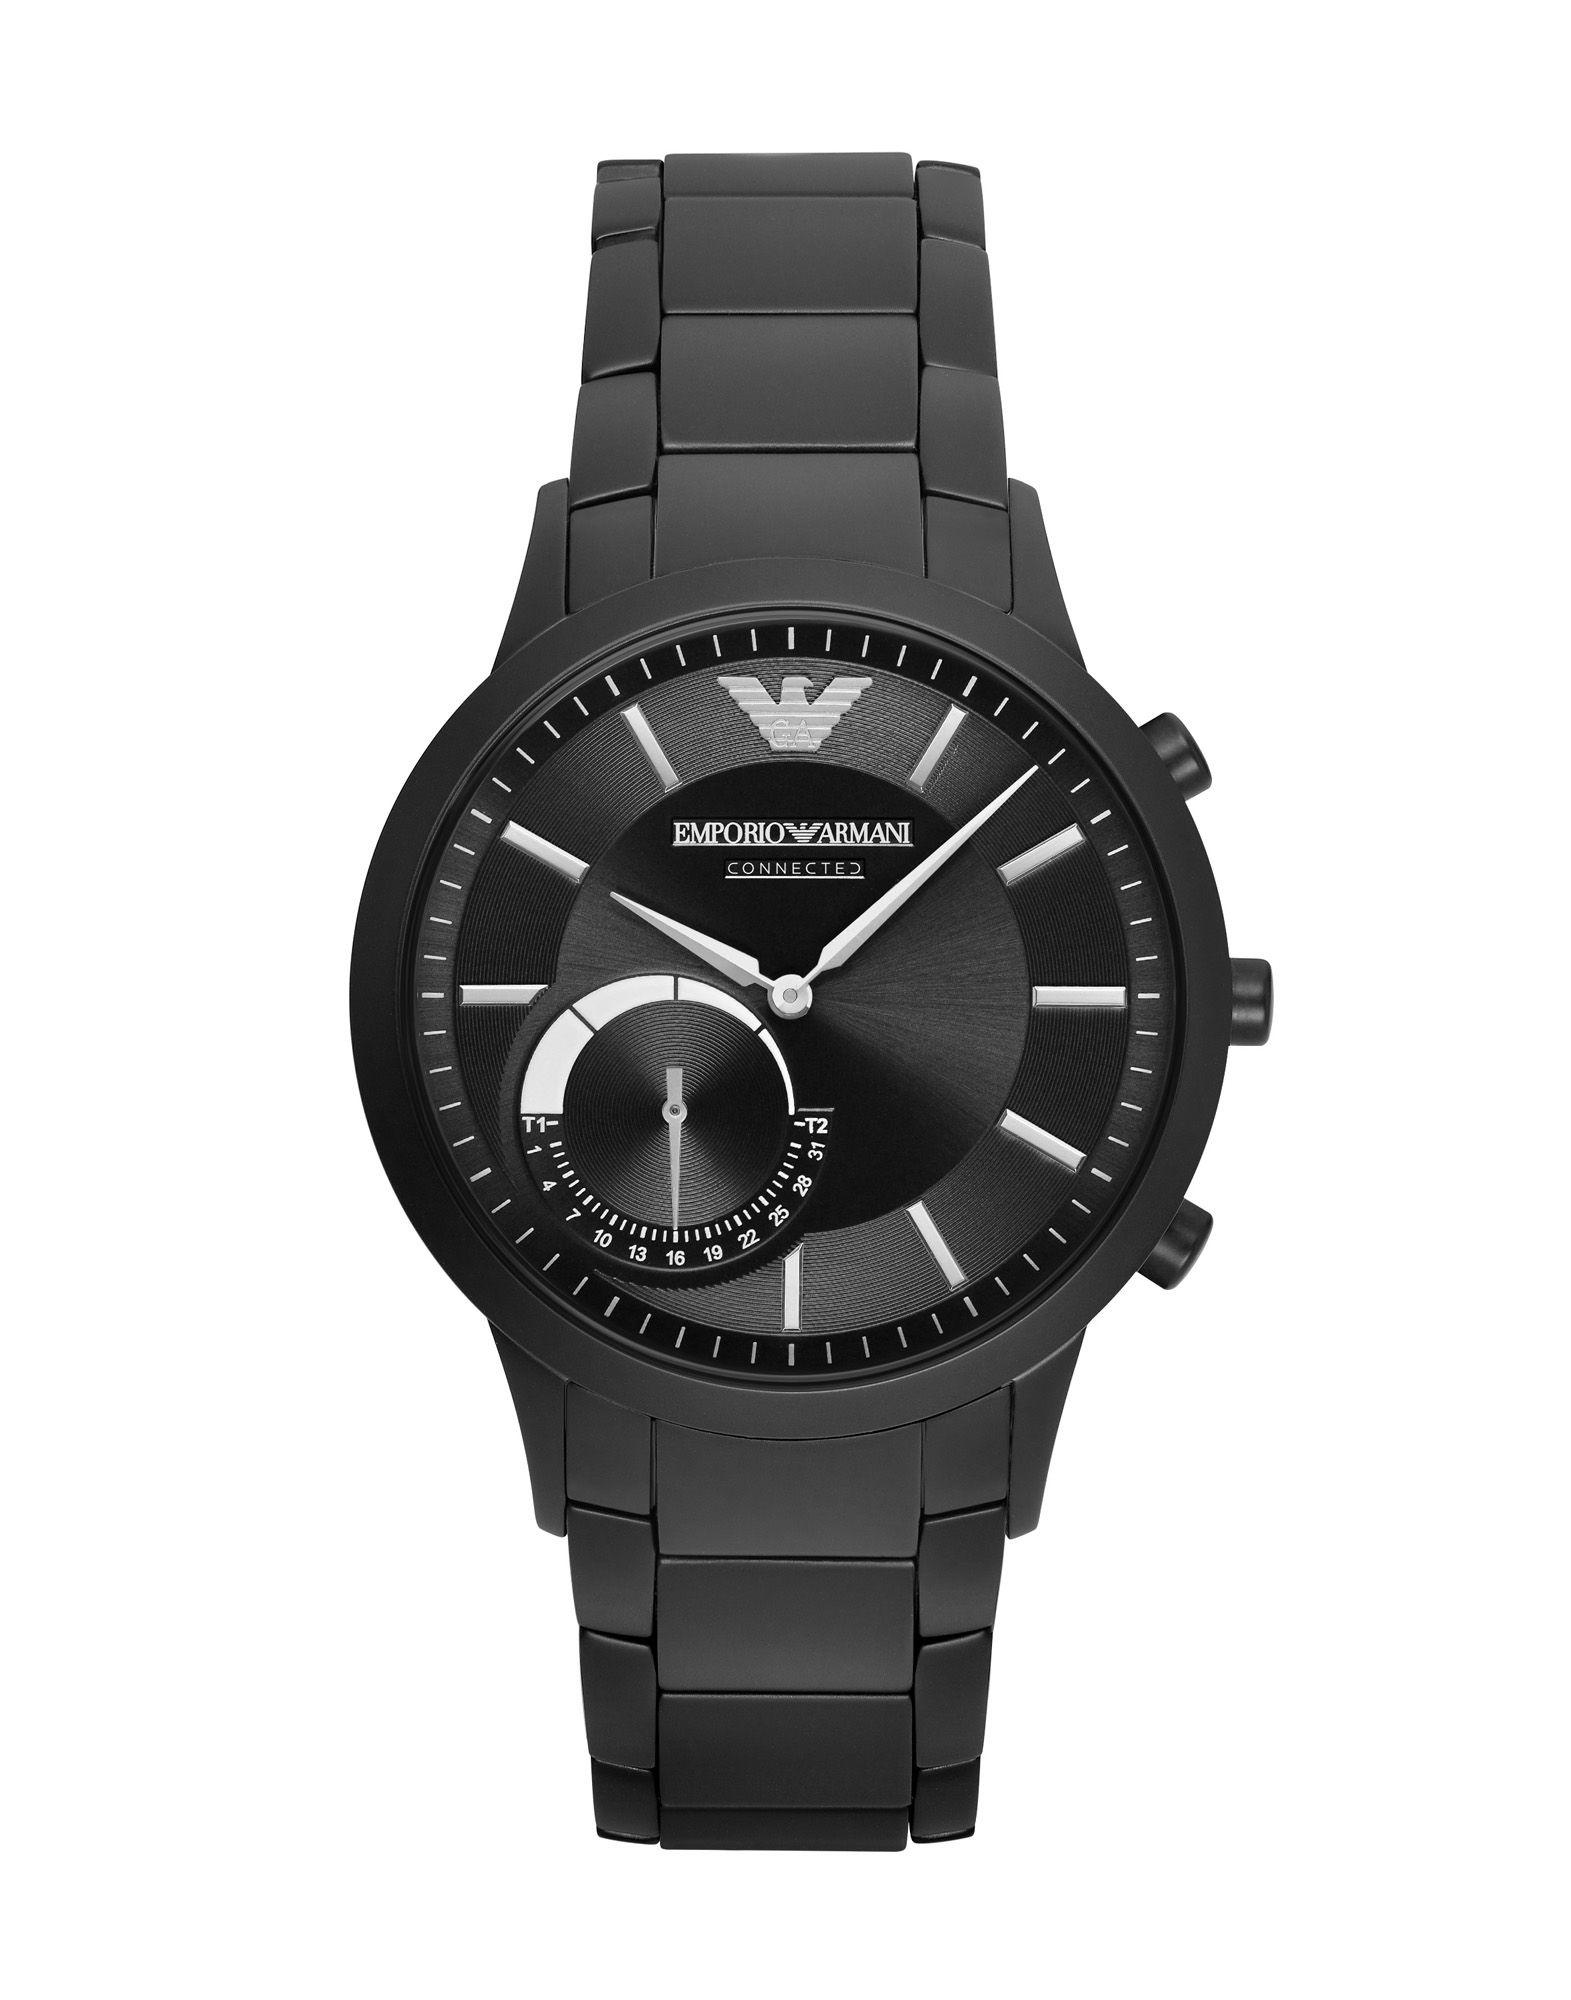 Lyst - Emporio Armani Smartwatch in Black for Men - Save 8.0%